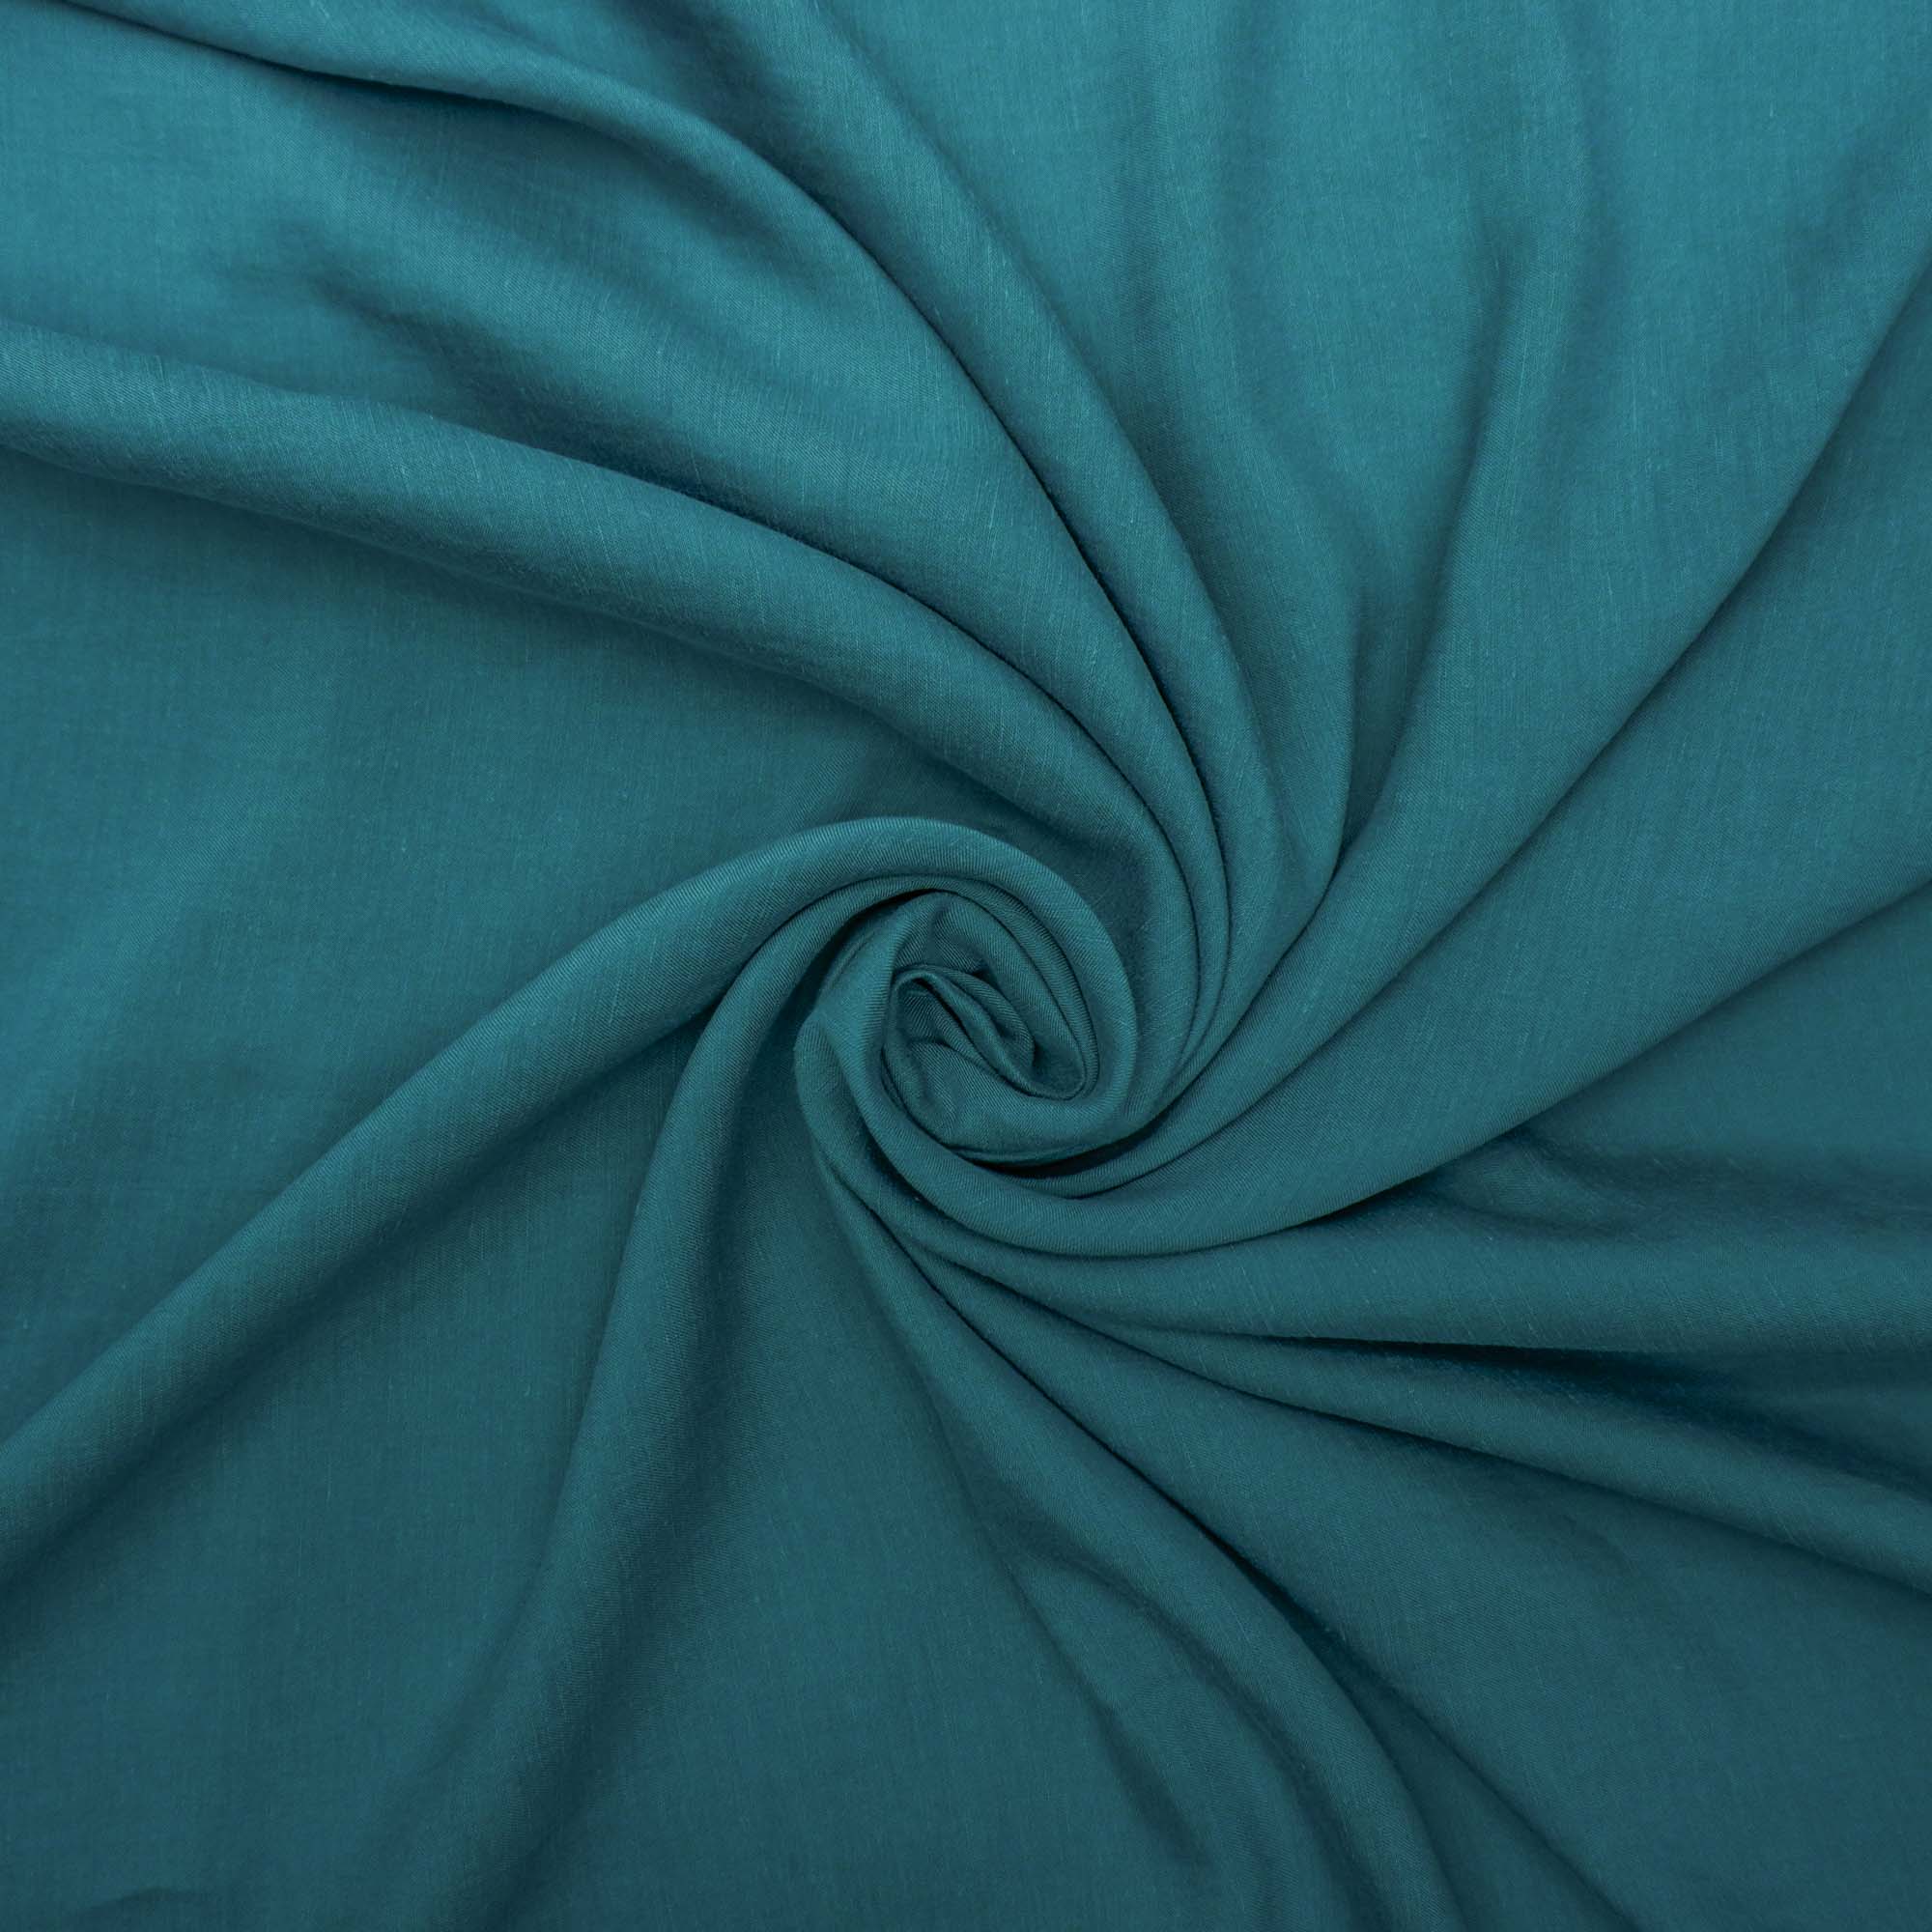 Tecido linho misto verde turquesa (tecido italiano legítimo)